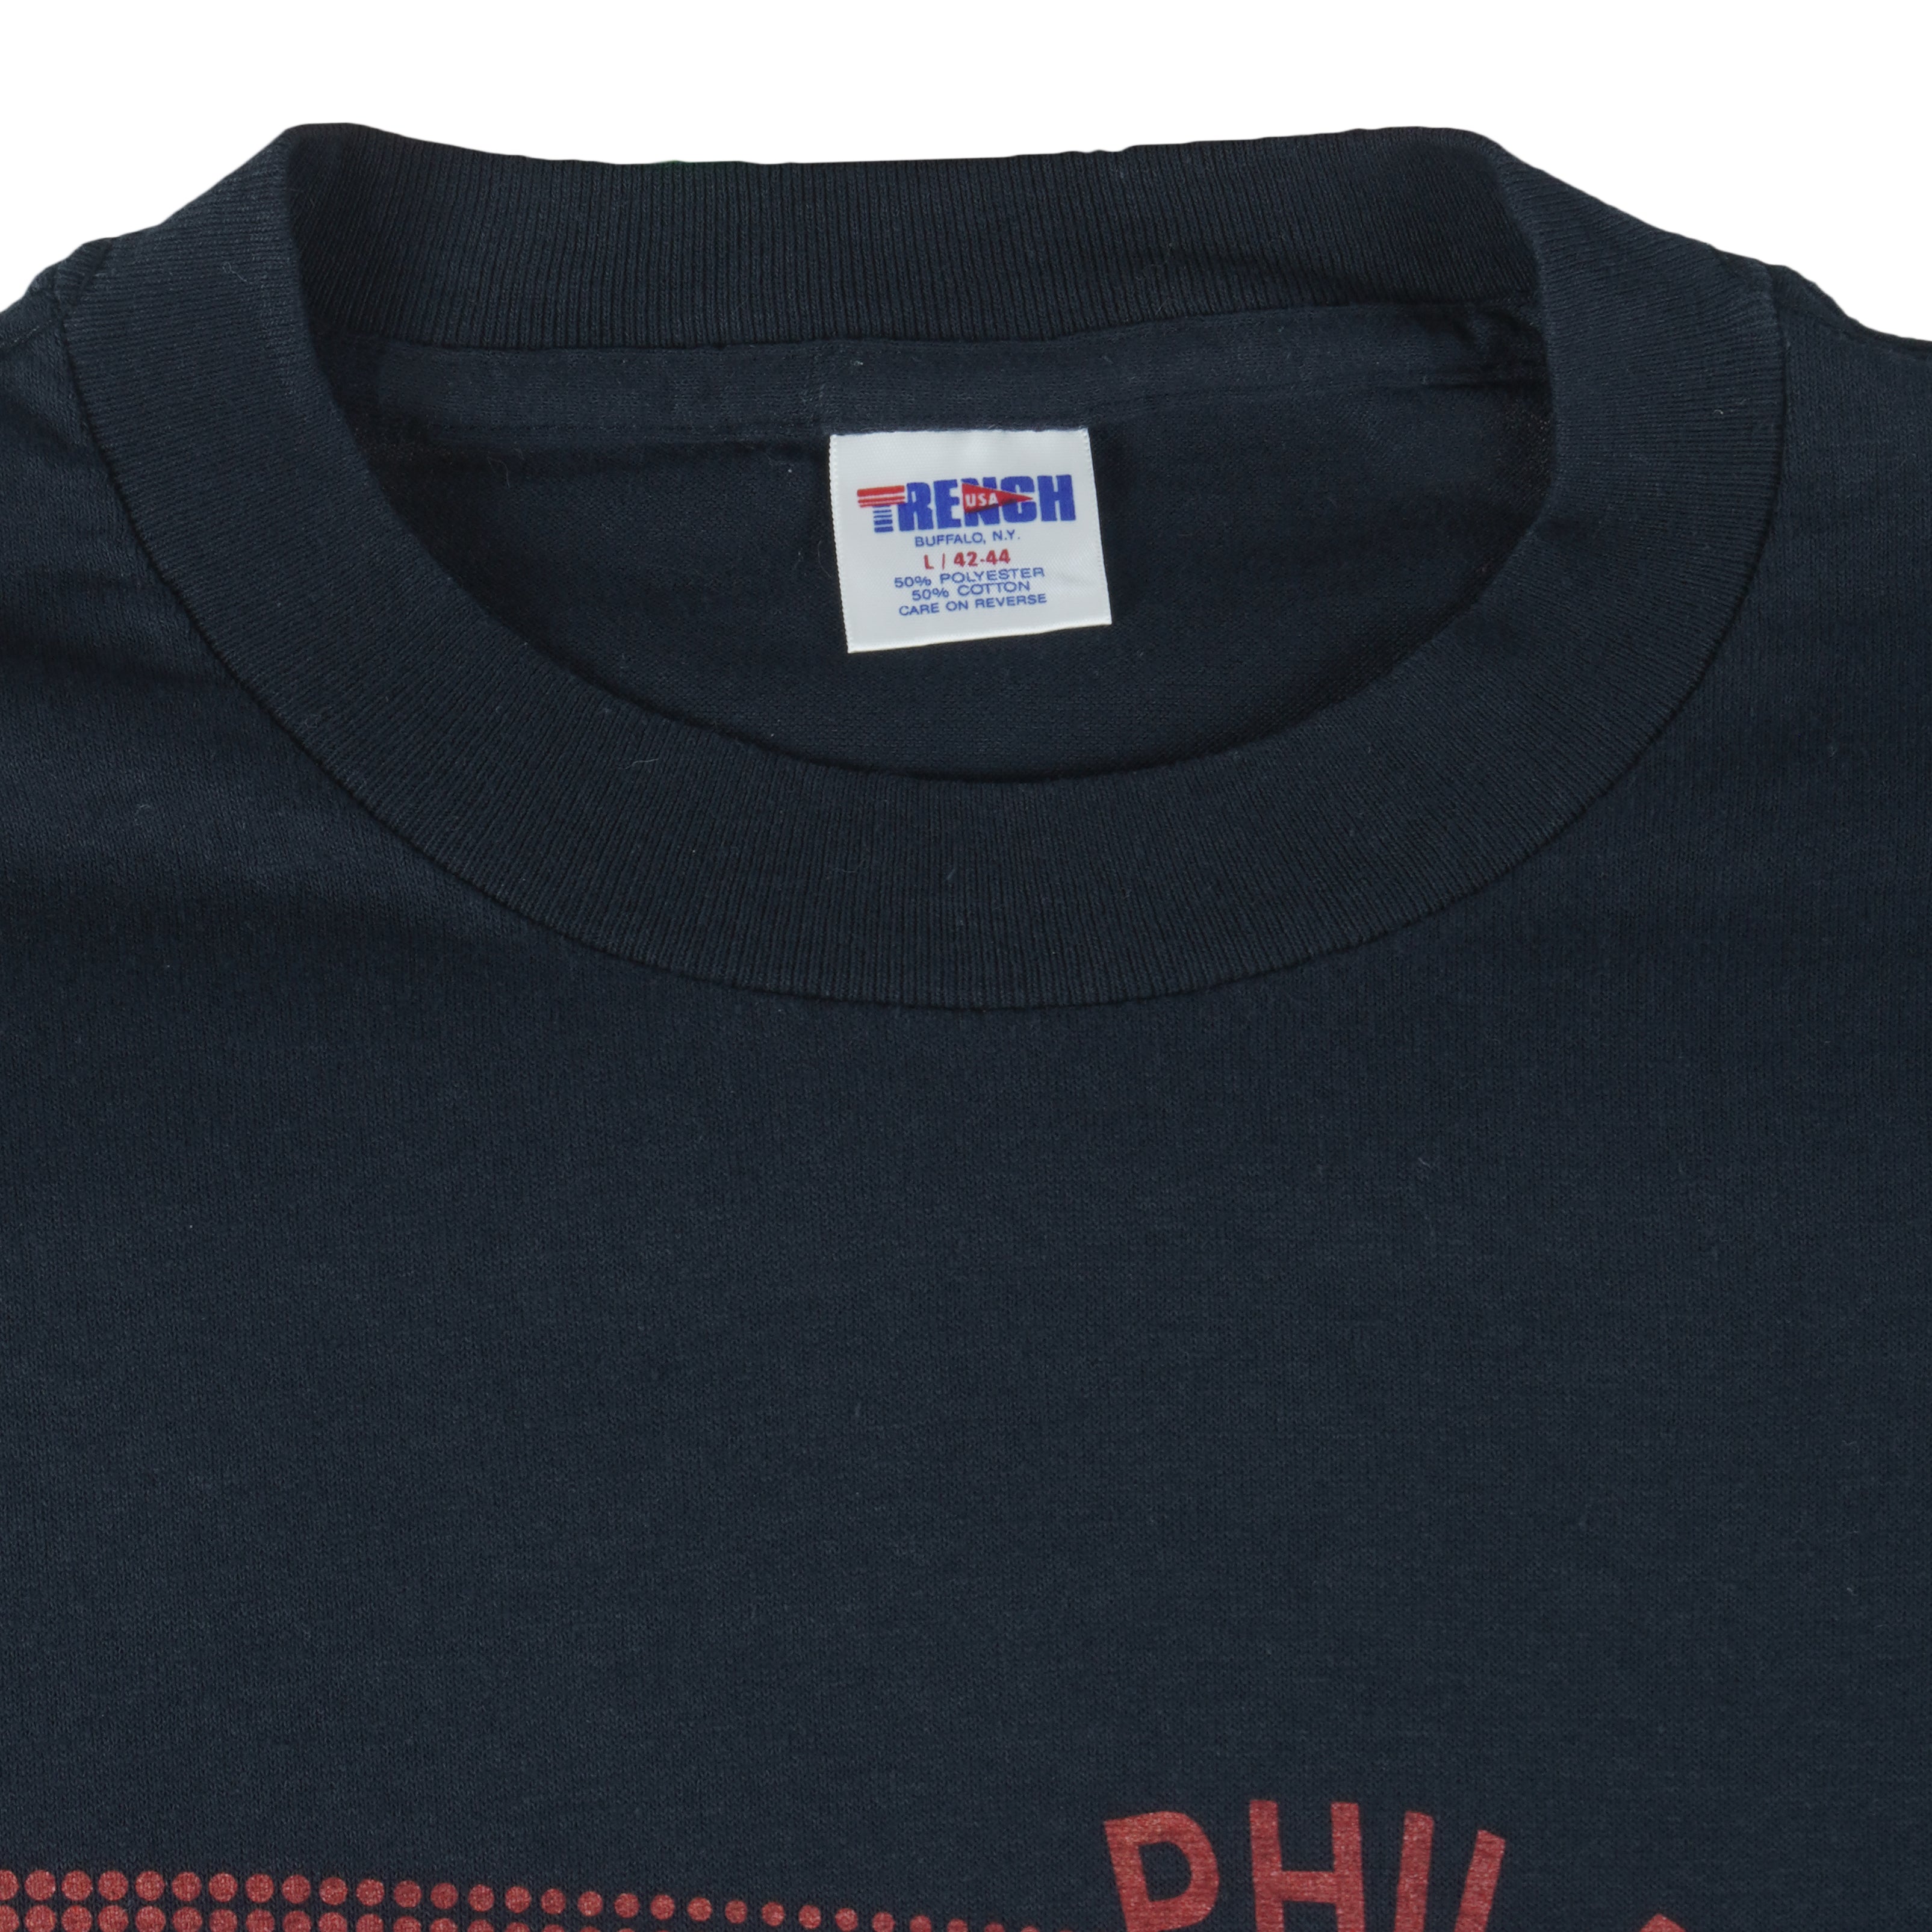 Vintage Philadelphia Eagles Trench NFL T-Shirt